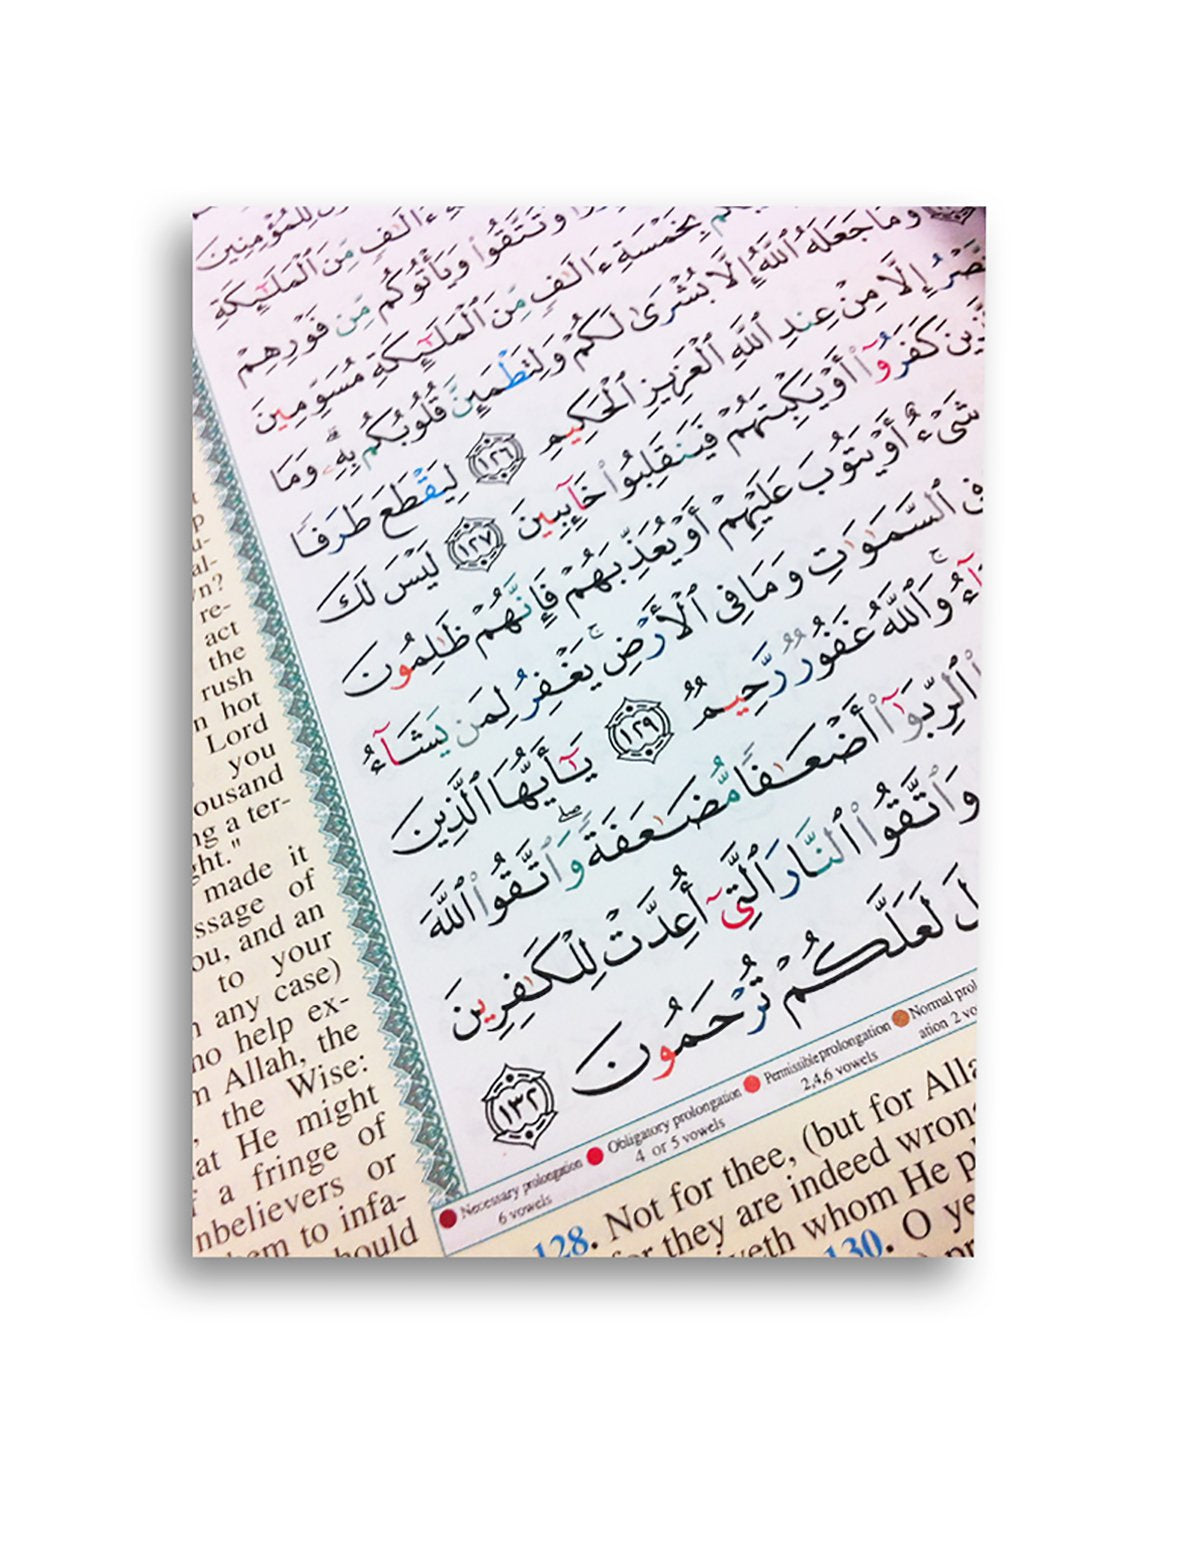 Tajweed Qur'an with English Meaning Translation in English-almanaar Islamic Store